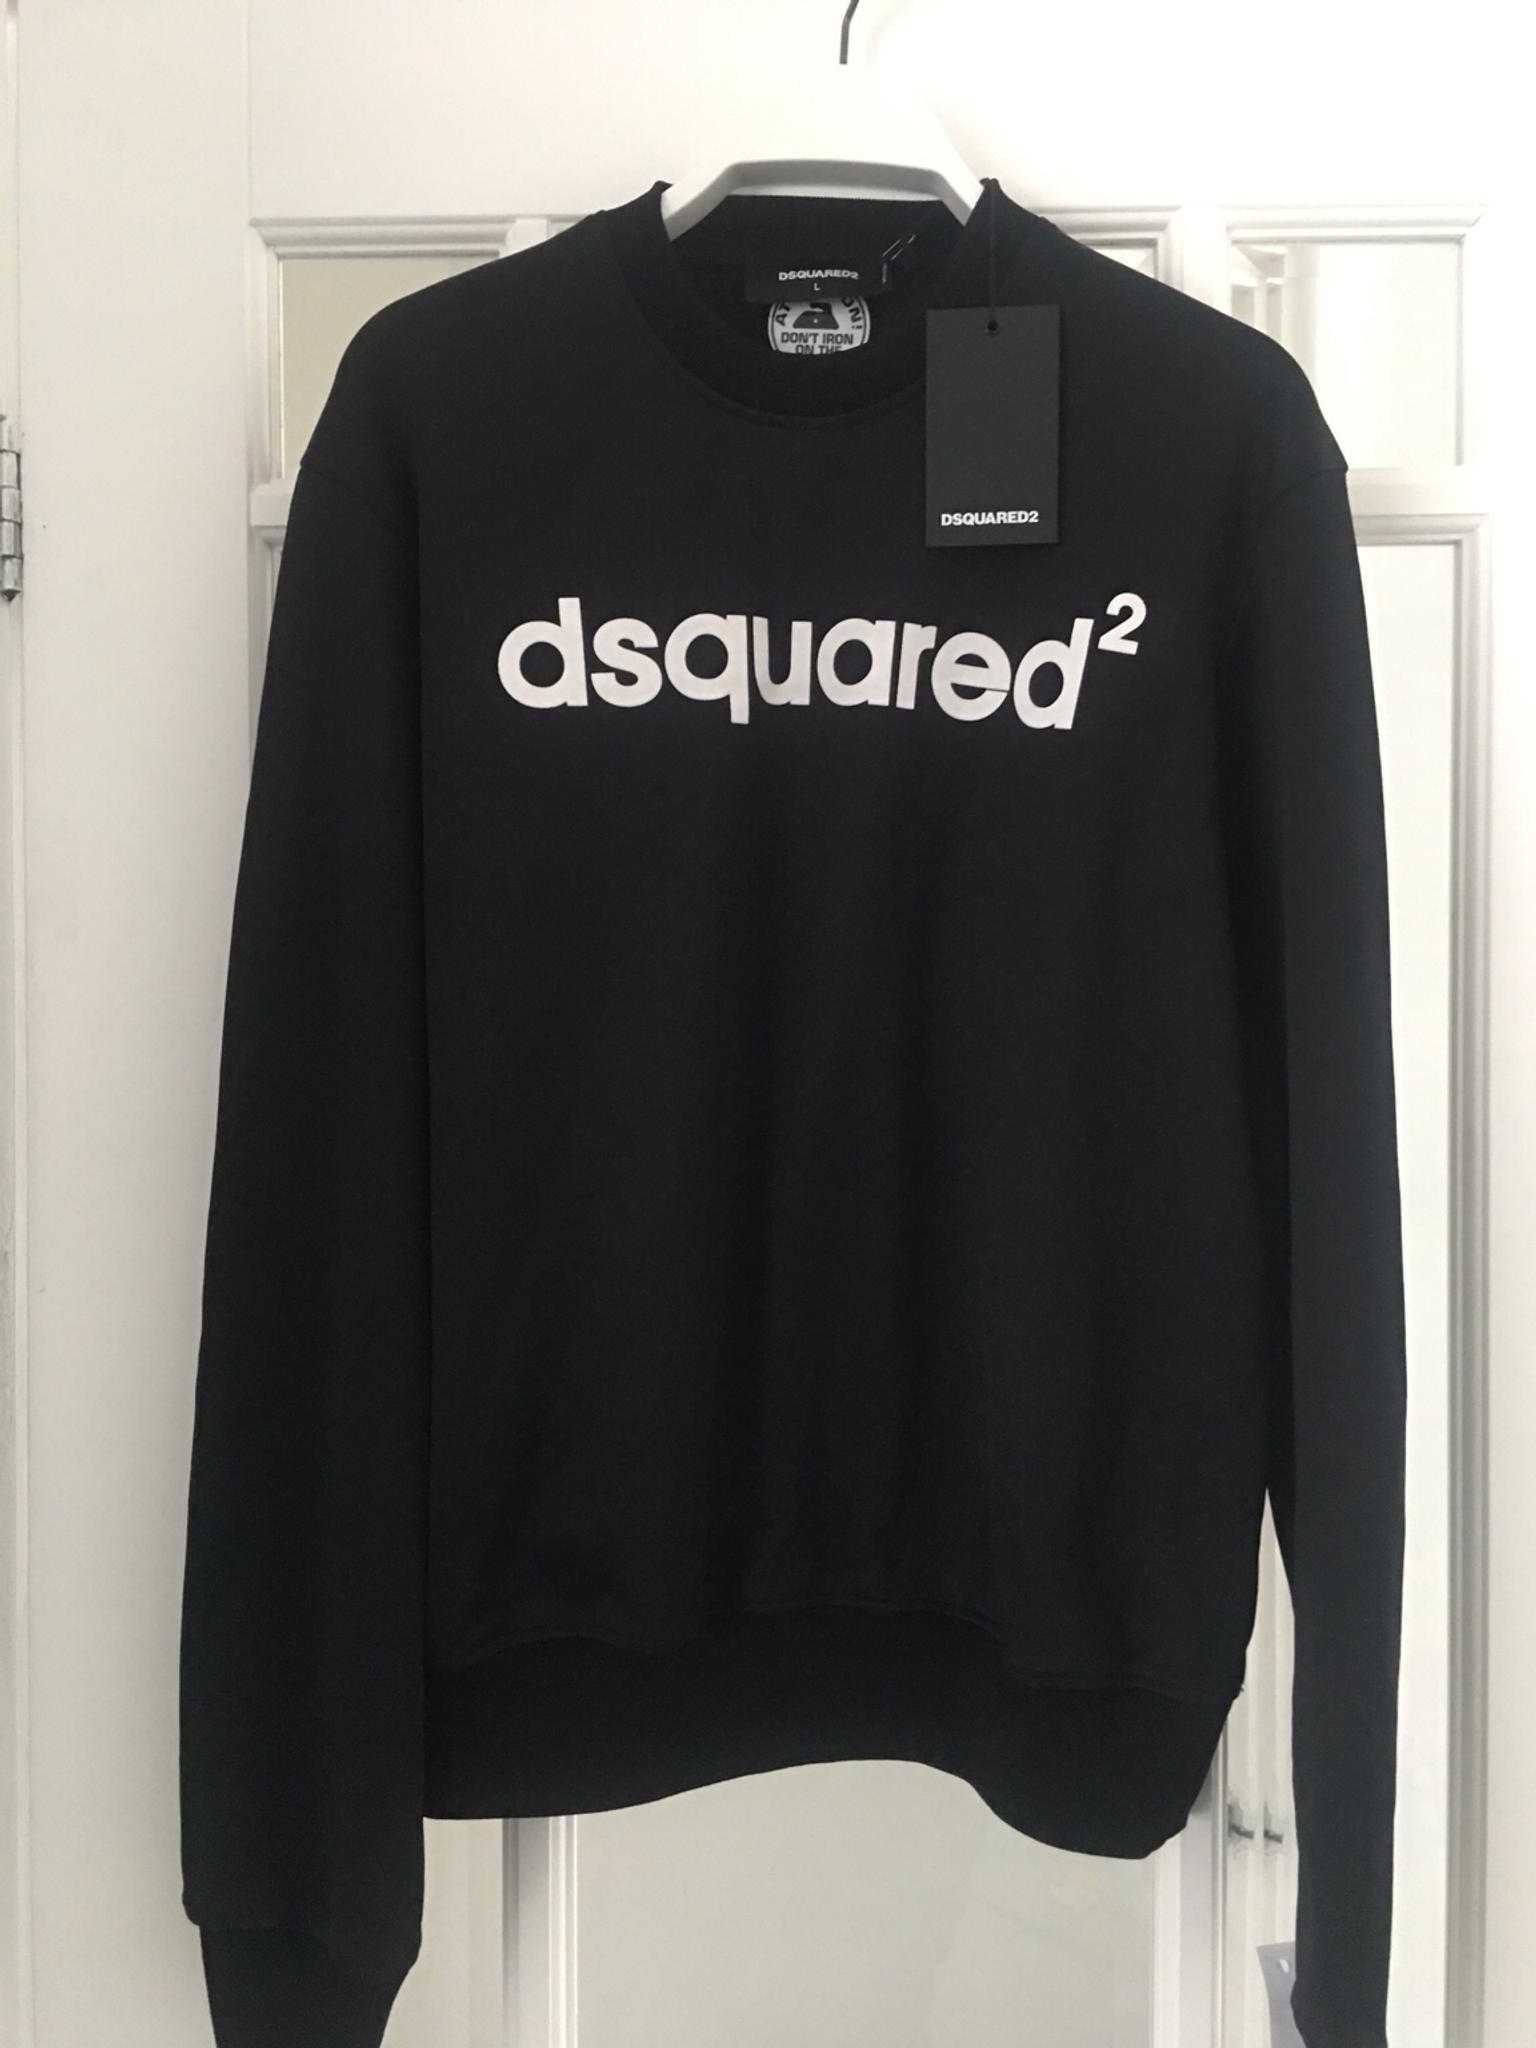 Dsquared Sweatshirt Sale Top Sellers, 50% OFF | jsazlaw.com